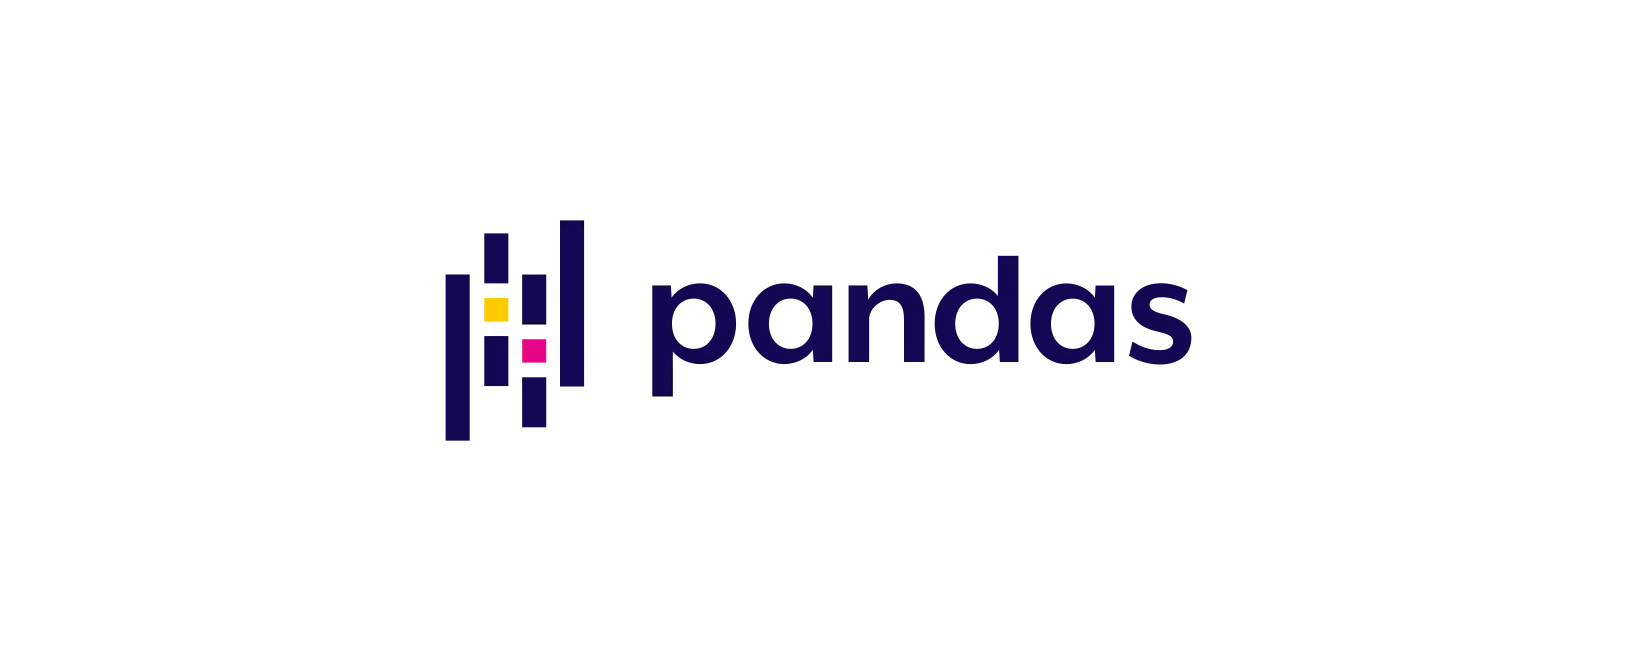 Pandas logo